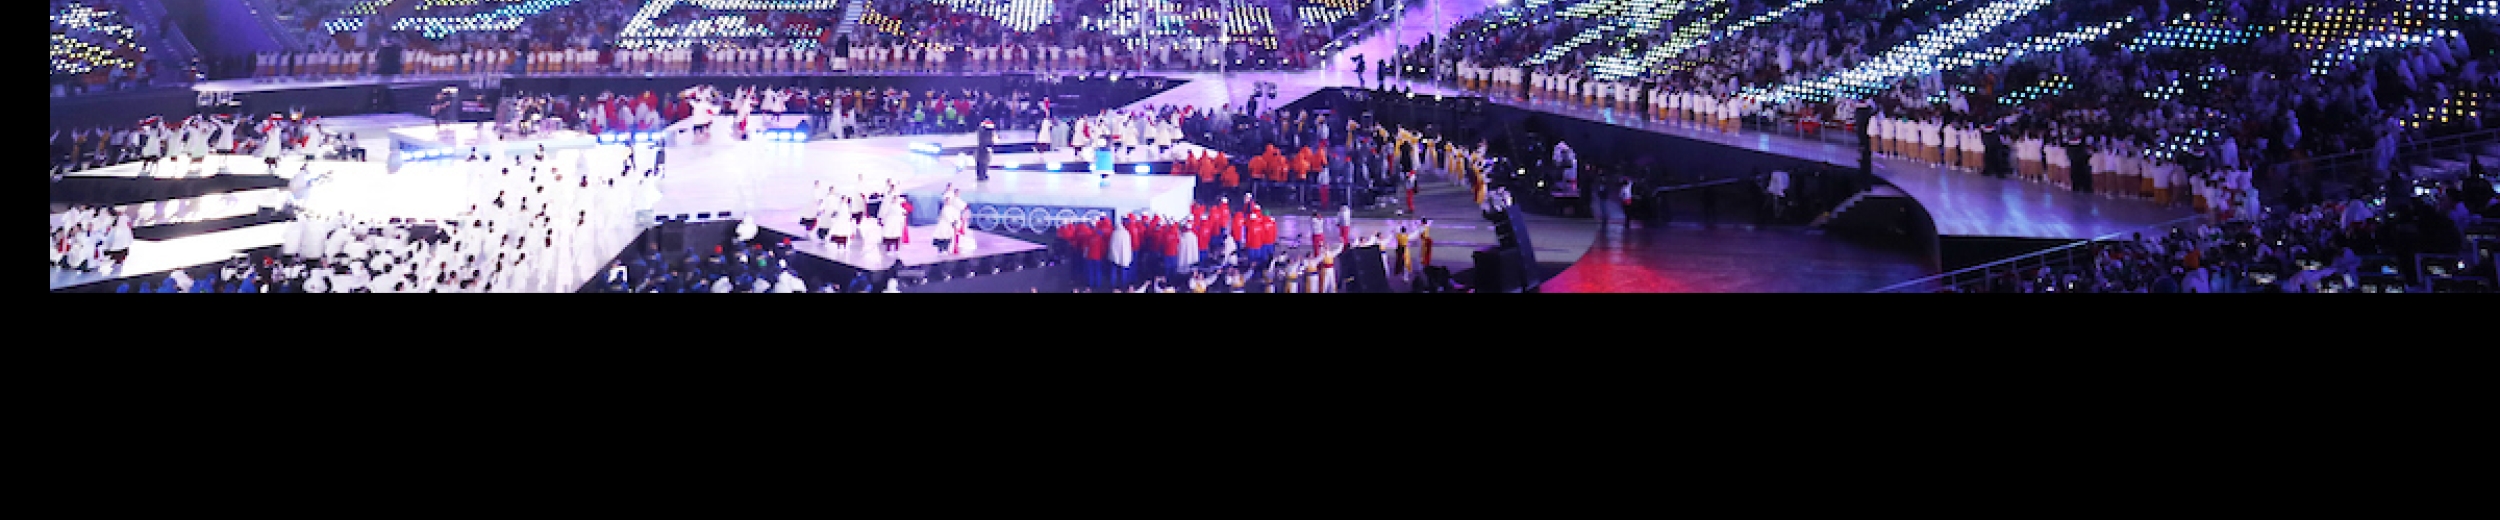 PyeongChang closing ceremonies fireworks